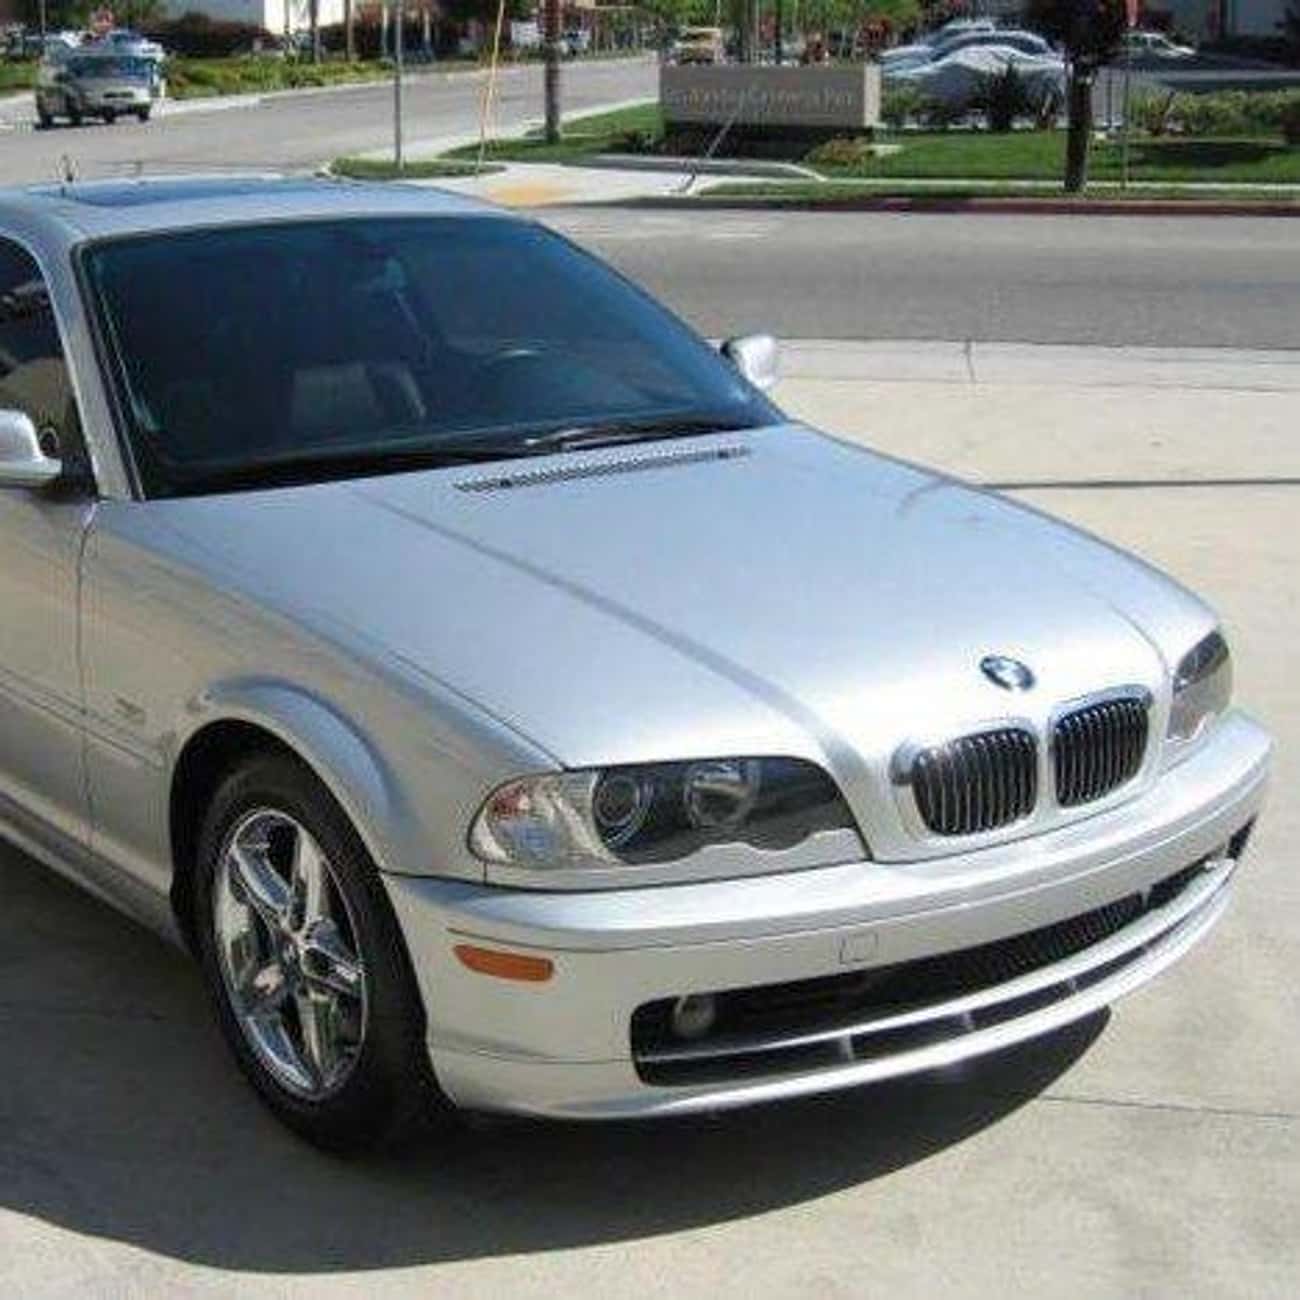 2000 BMW 3-Series